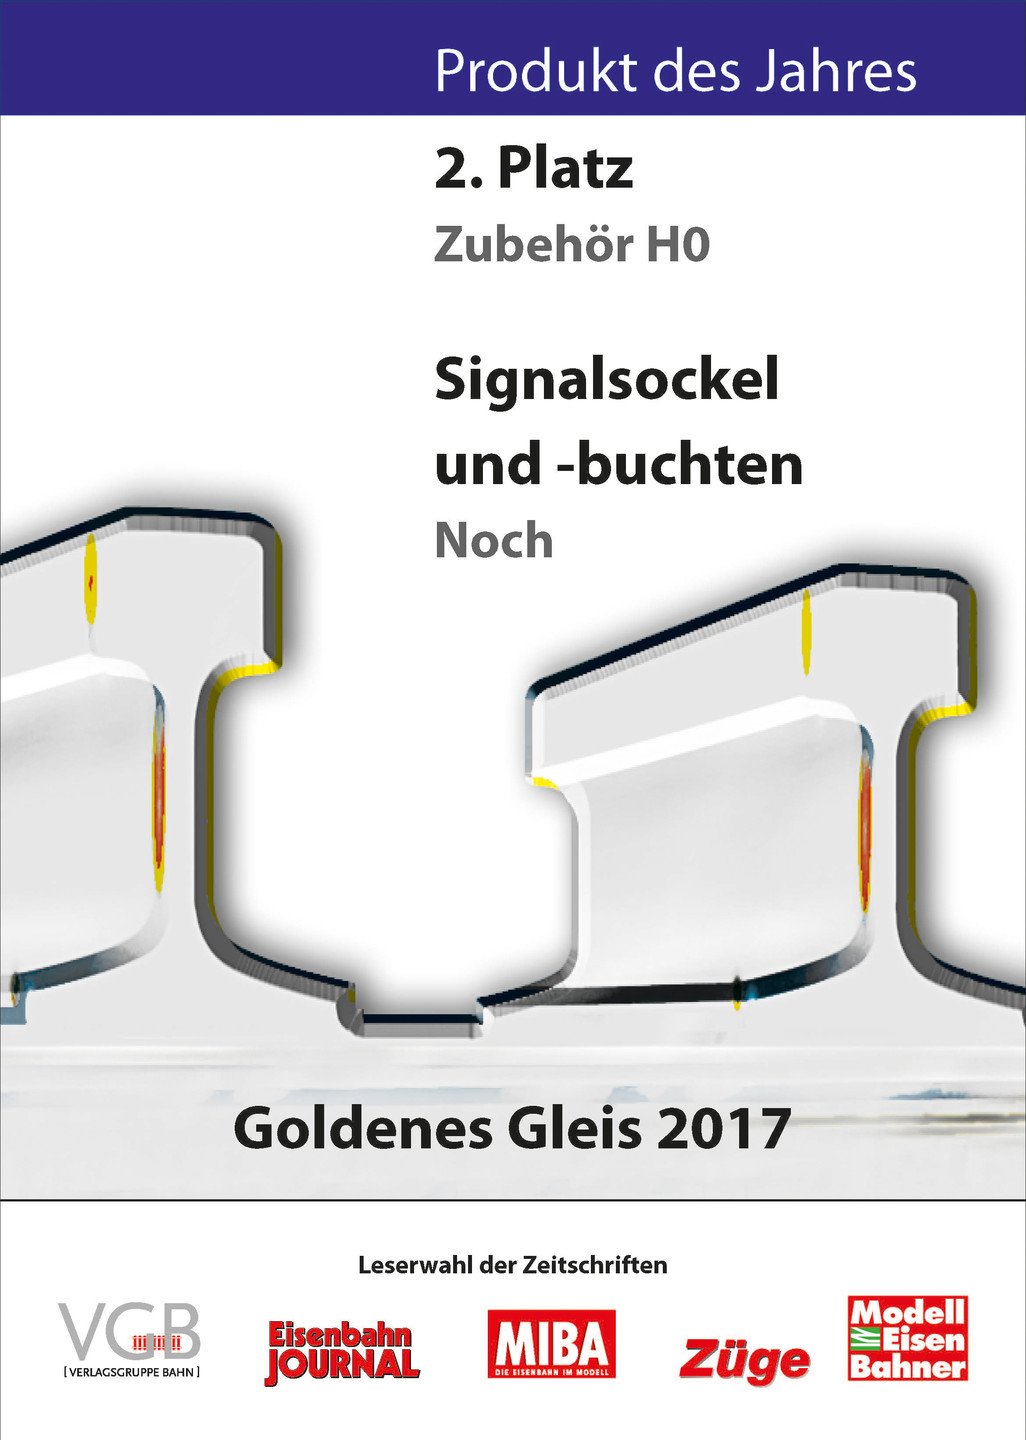 Urkunde "Goldenes Gleis 2017"